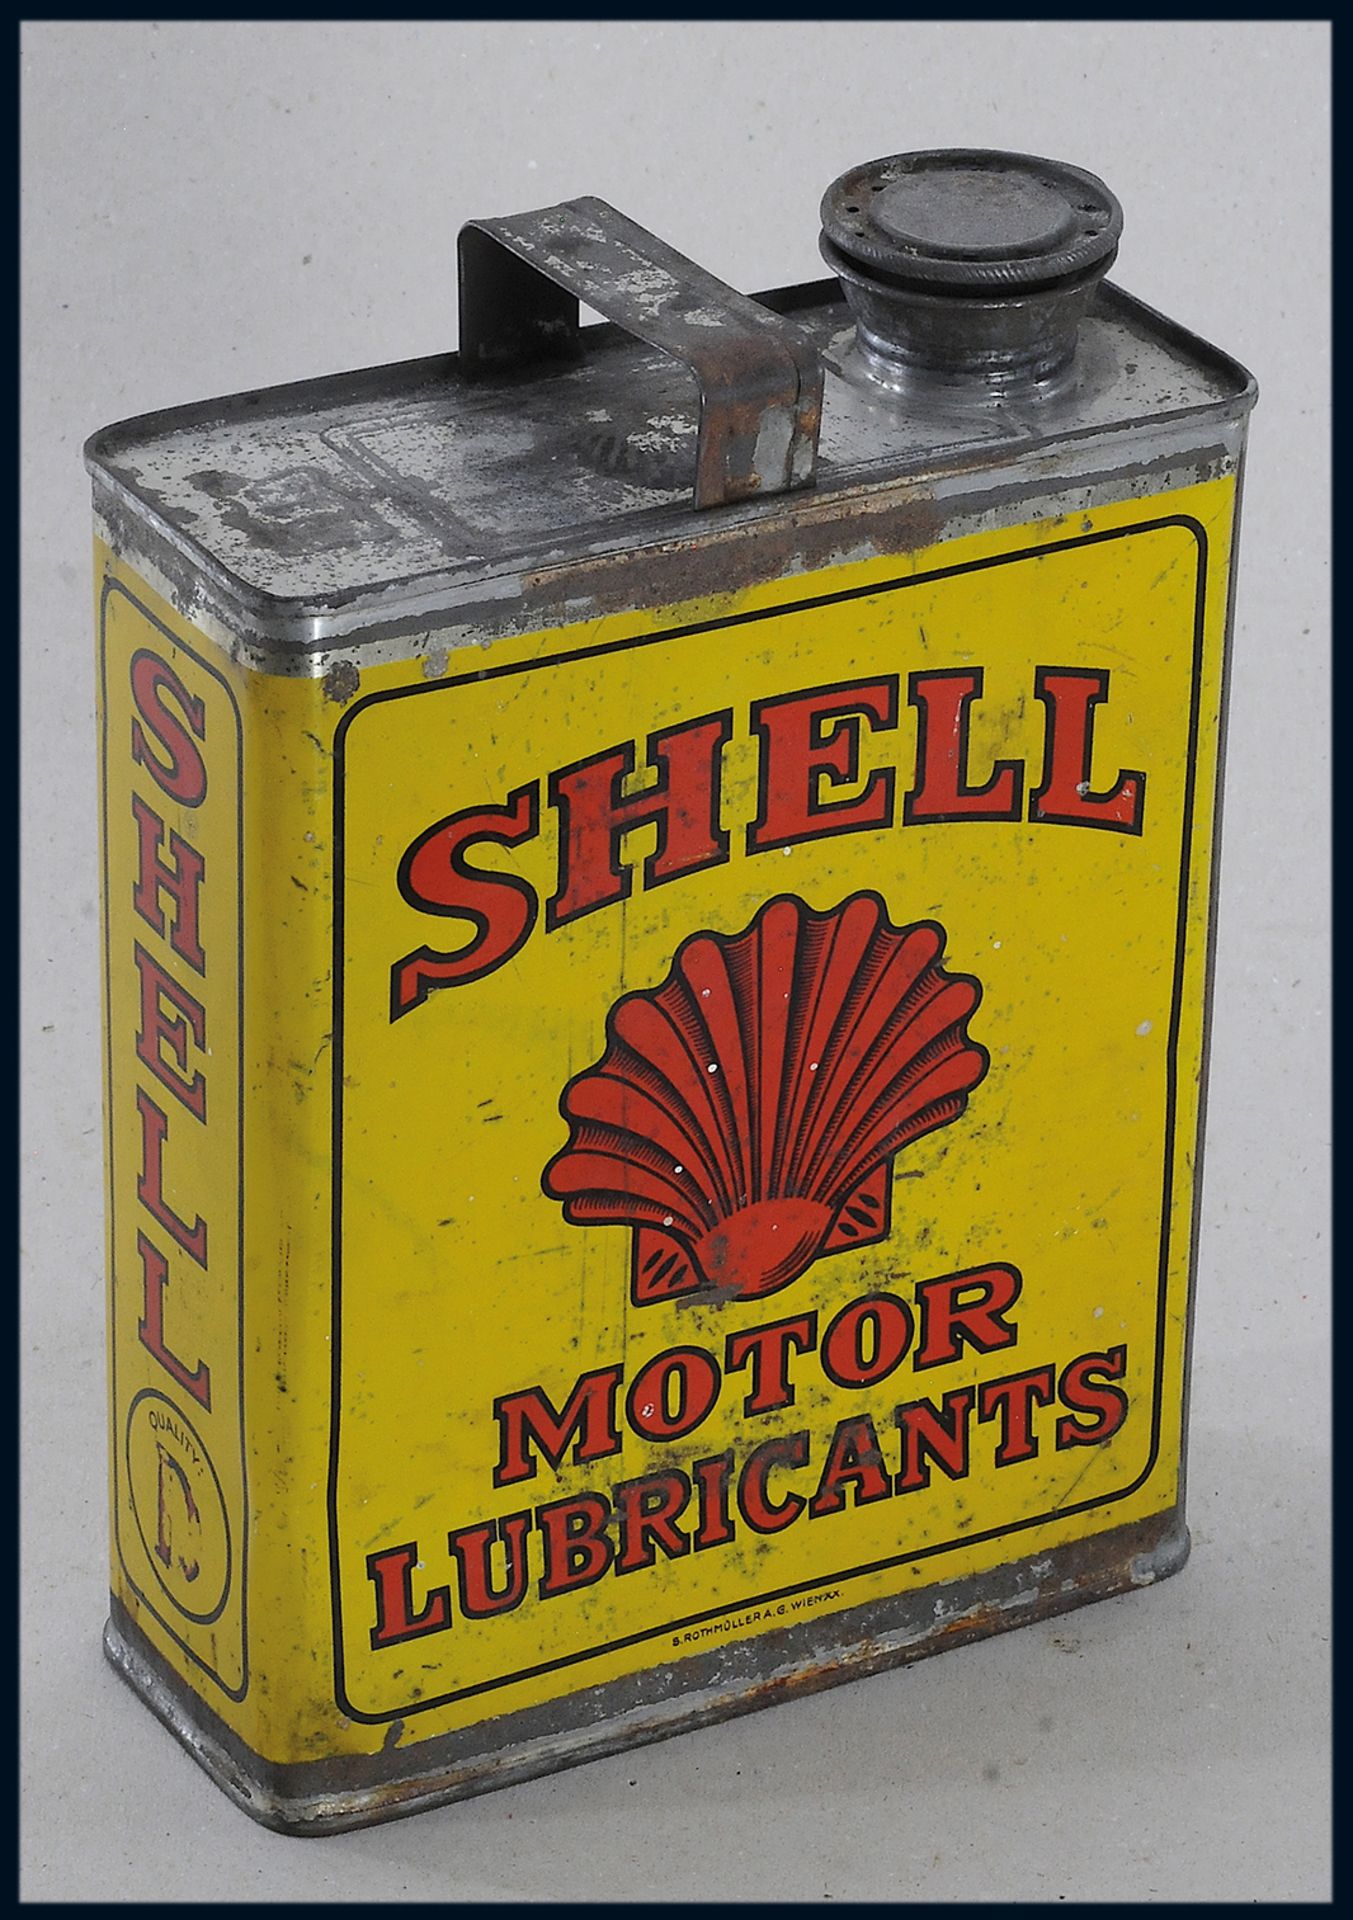 Shell Lubricants / Motor Oil, 2 Liter Öldose